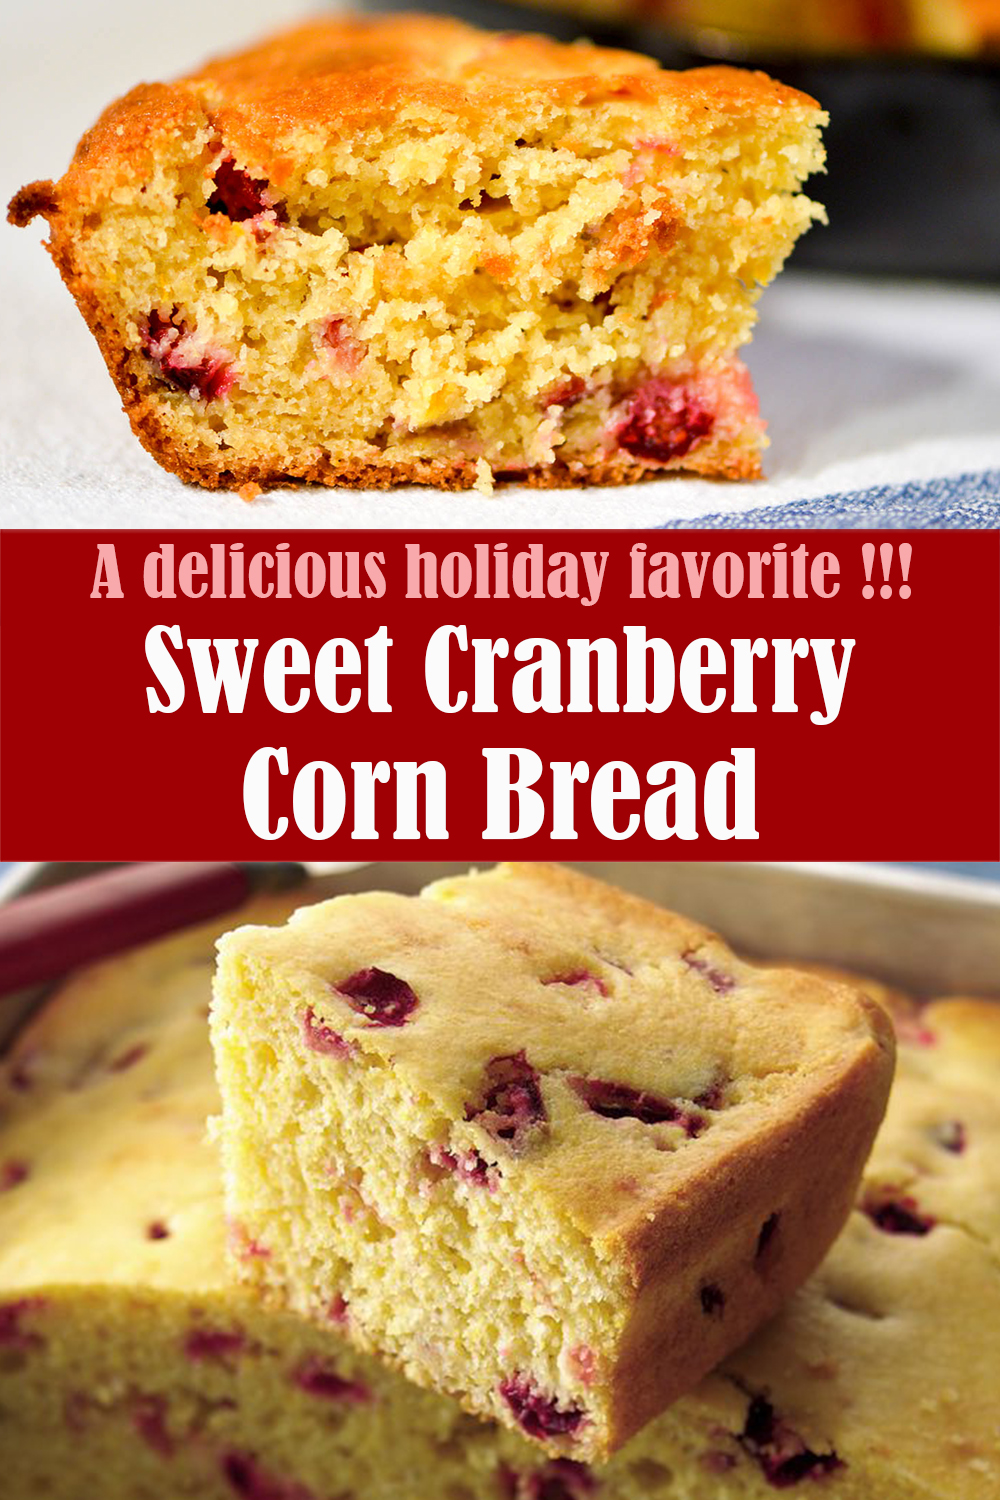 Sweet Cranberry Corn Bread